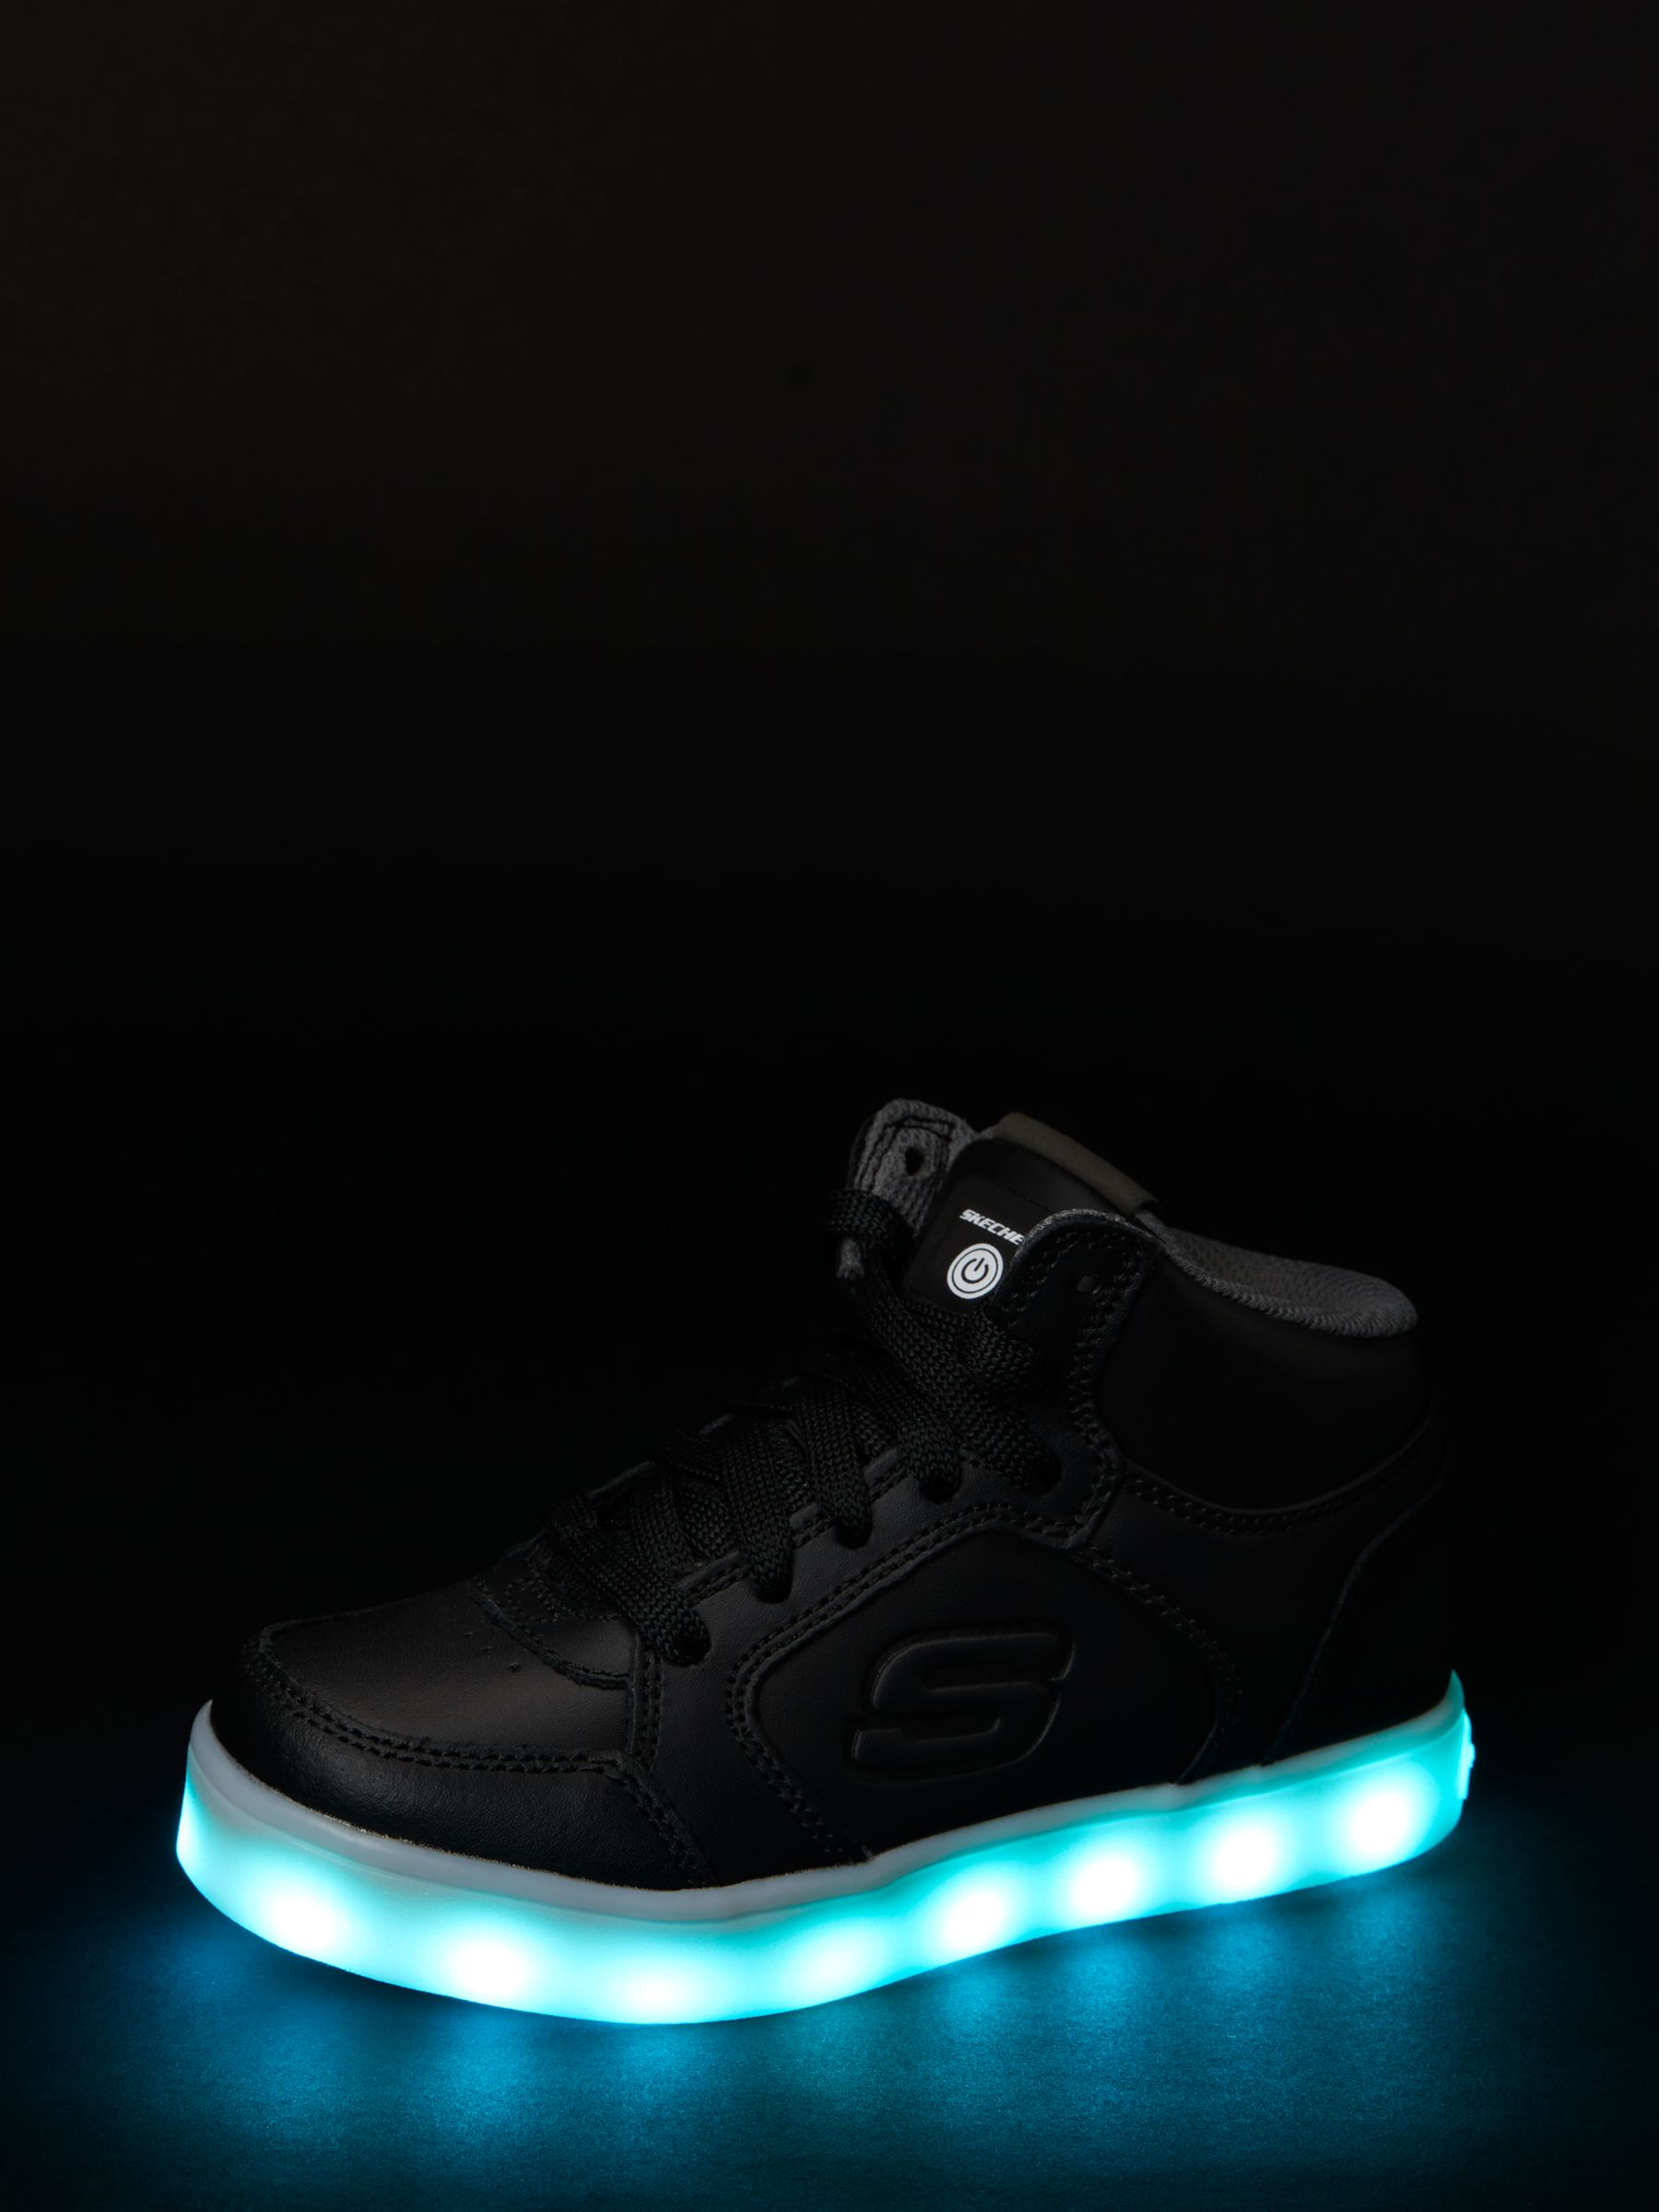 skechers led light up shoes